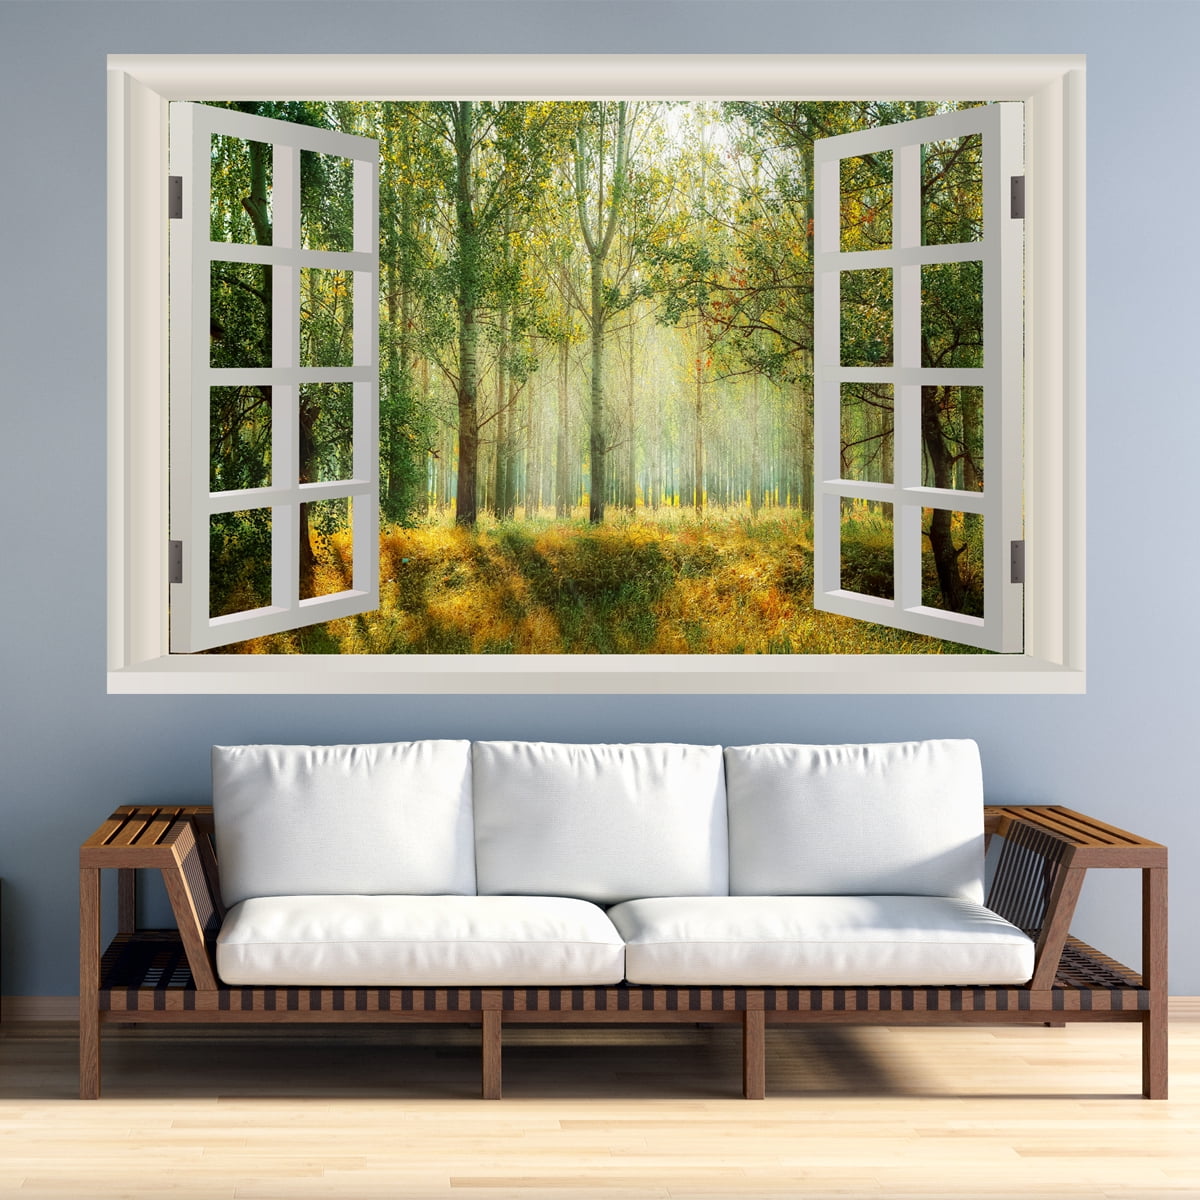 3D Curtain Window View Island Art Wall Sticker Living Room Bedroom Decal Trend 